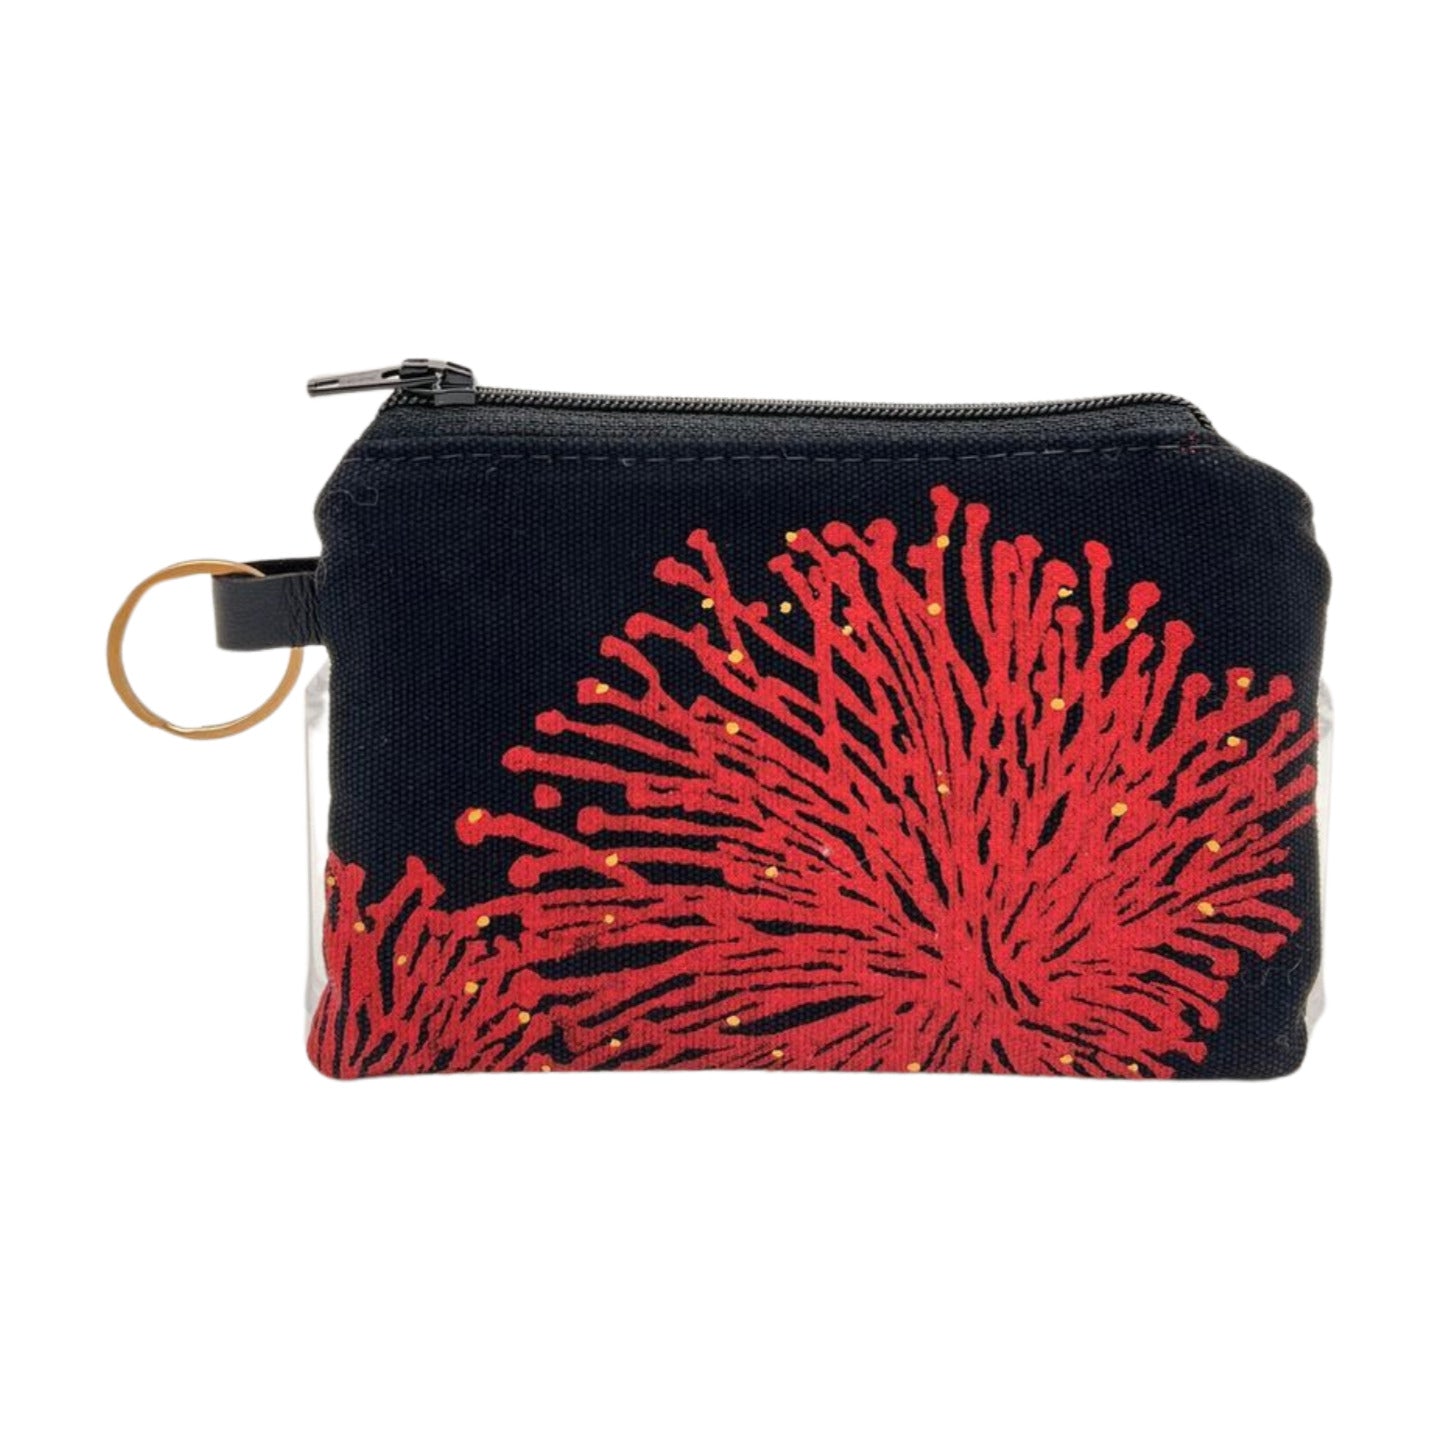 Pop-Up Mākeke - A Maui Day Original Handbags - Handprinted Mini Handbag - Red ‘Ohi’a on Black Canvas - Front View